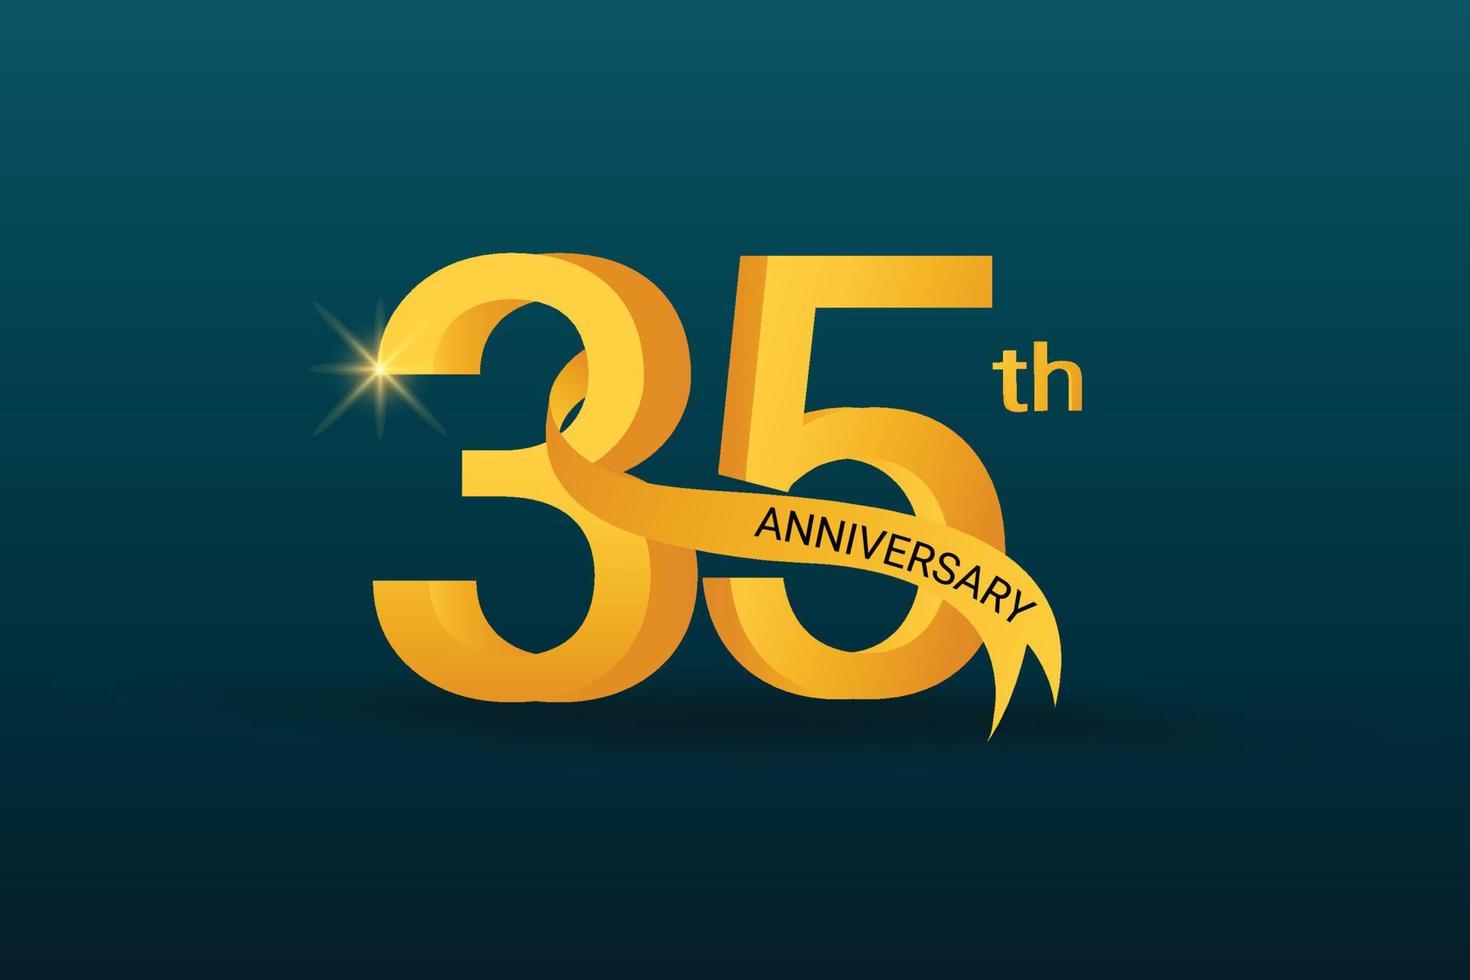 3D Golden 35 Years anniversary celebration Vector element